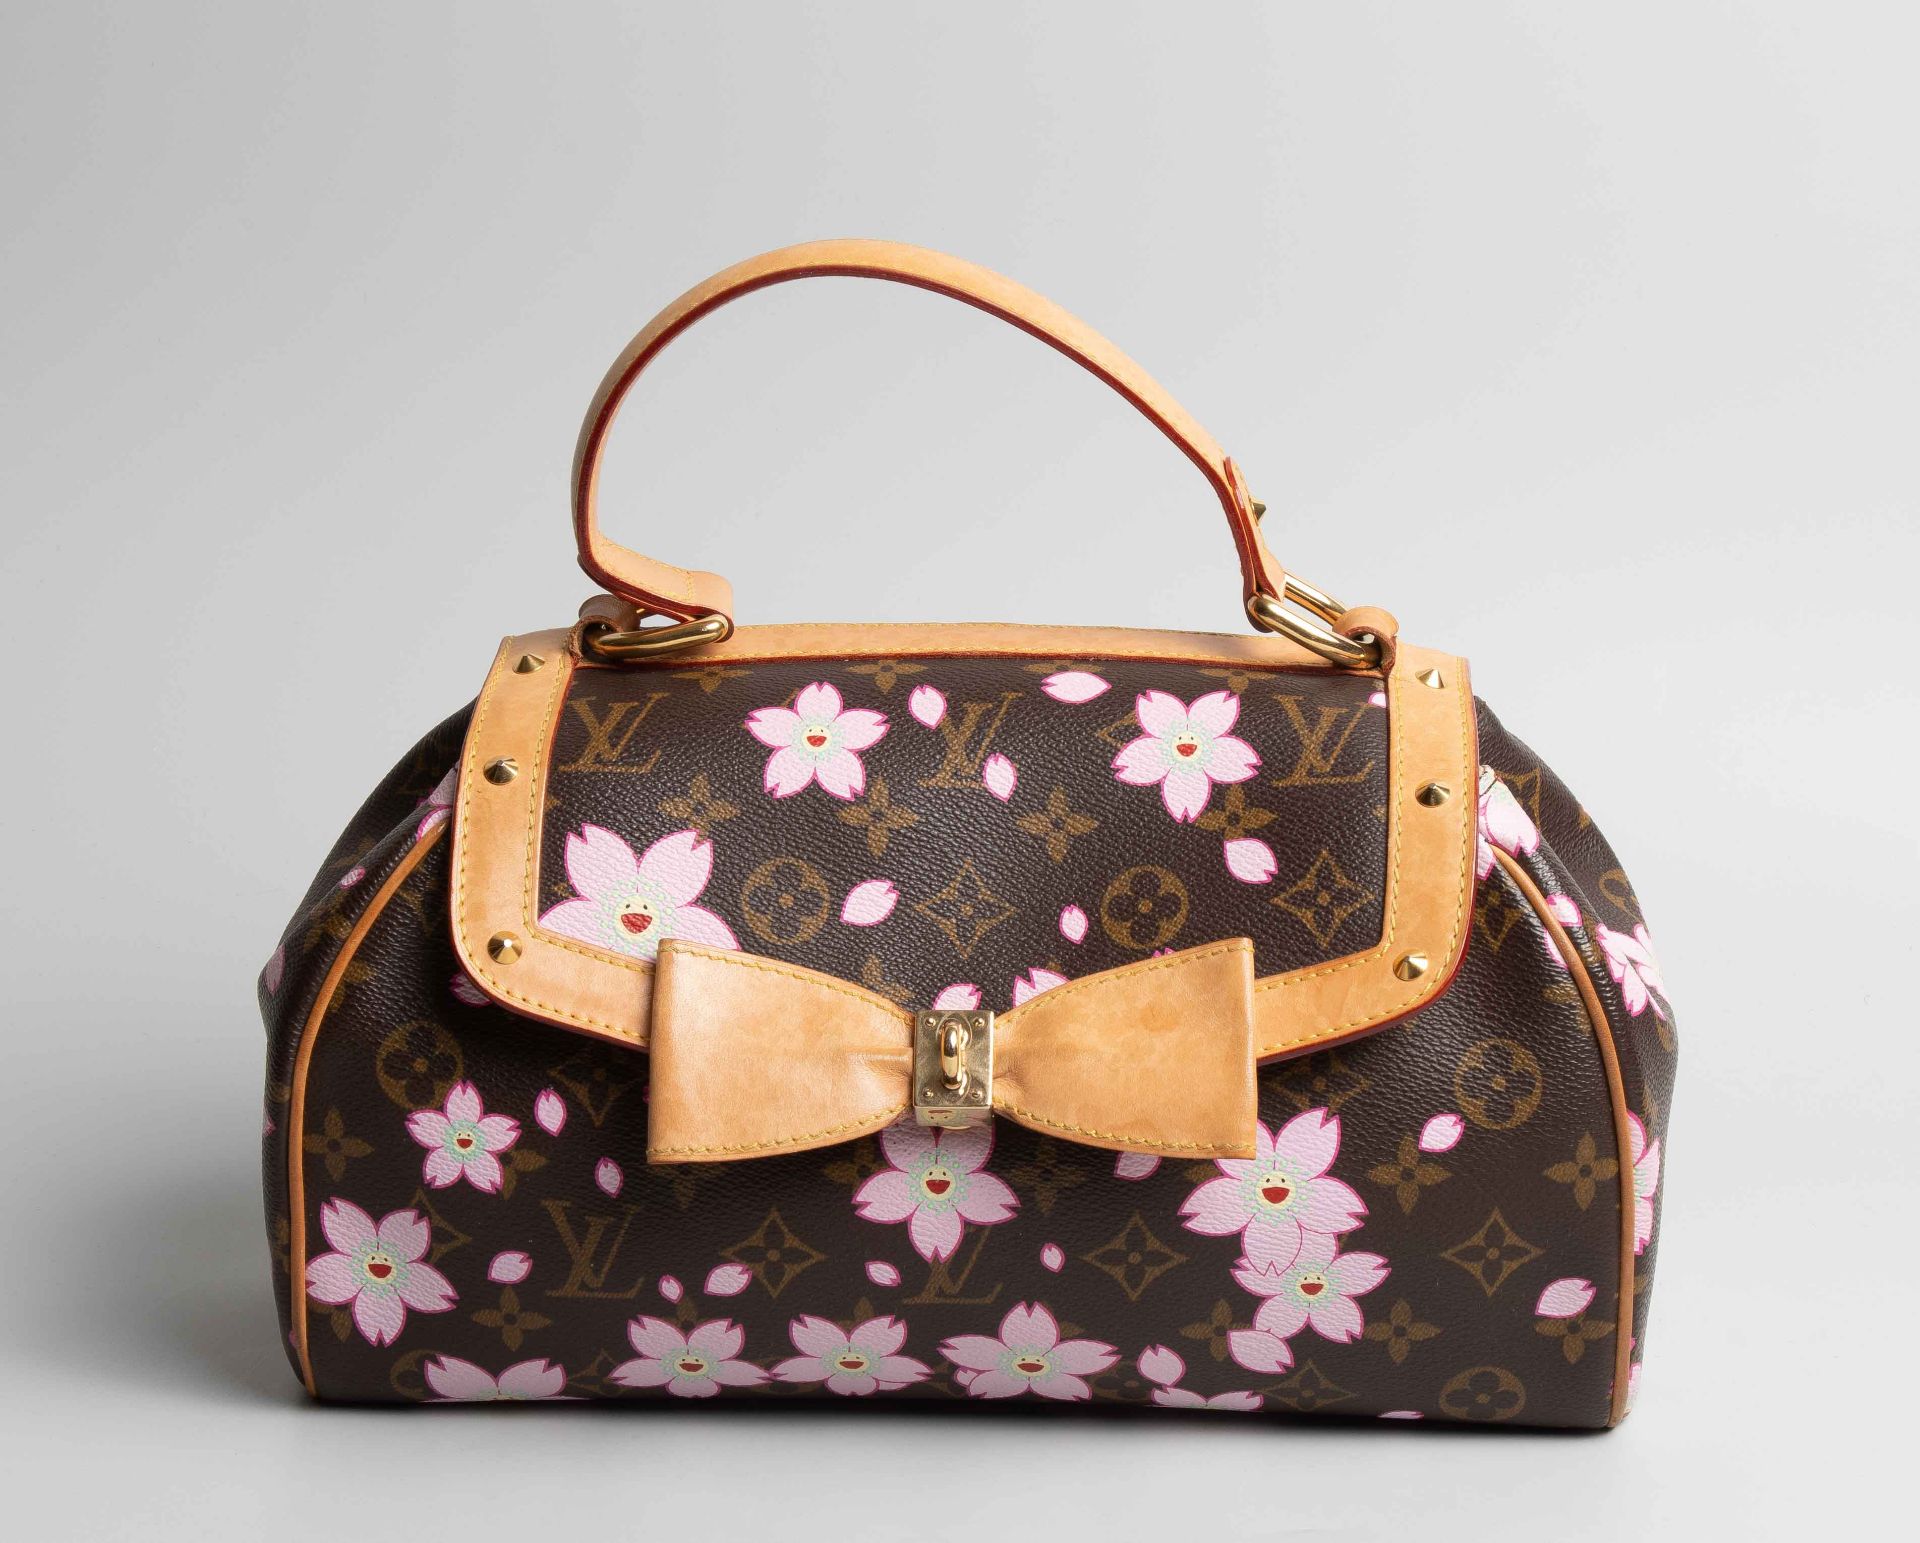 Louis Vuitton, Handtasche "Monogram Cherry Blossom Sac Retro" - Image 3 of 20